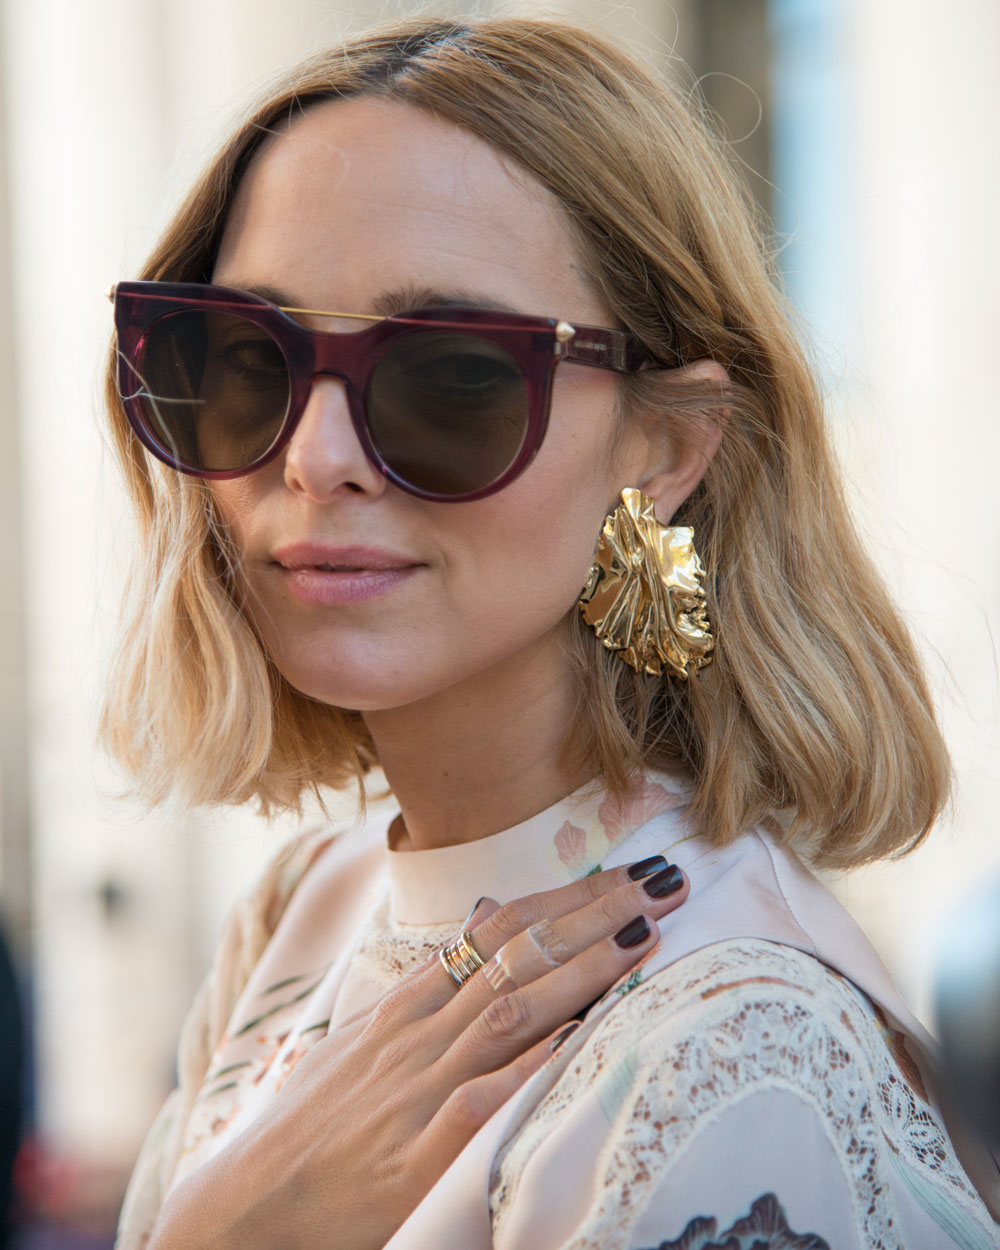 statement earrings street style fashion trends